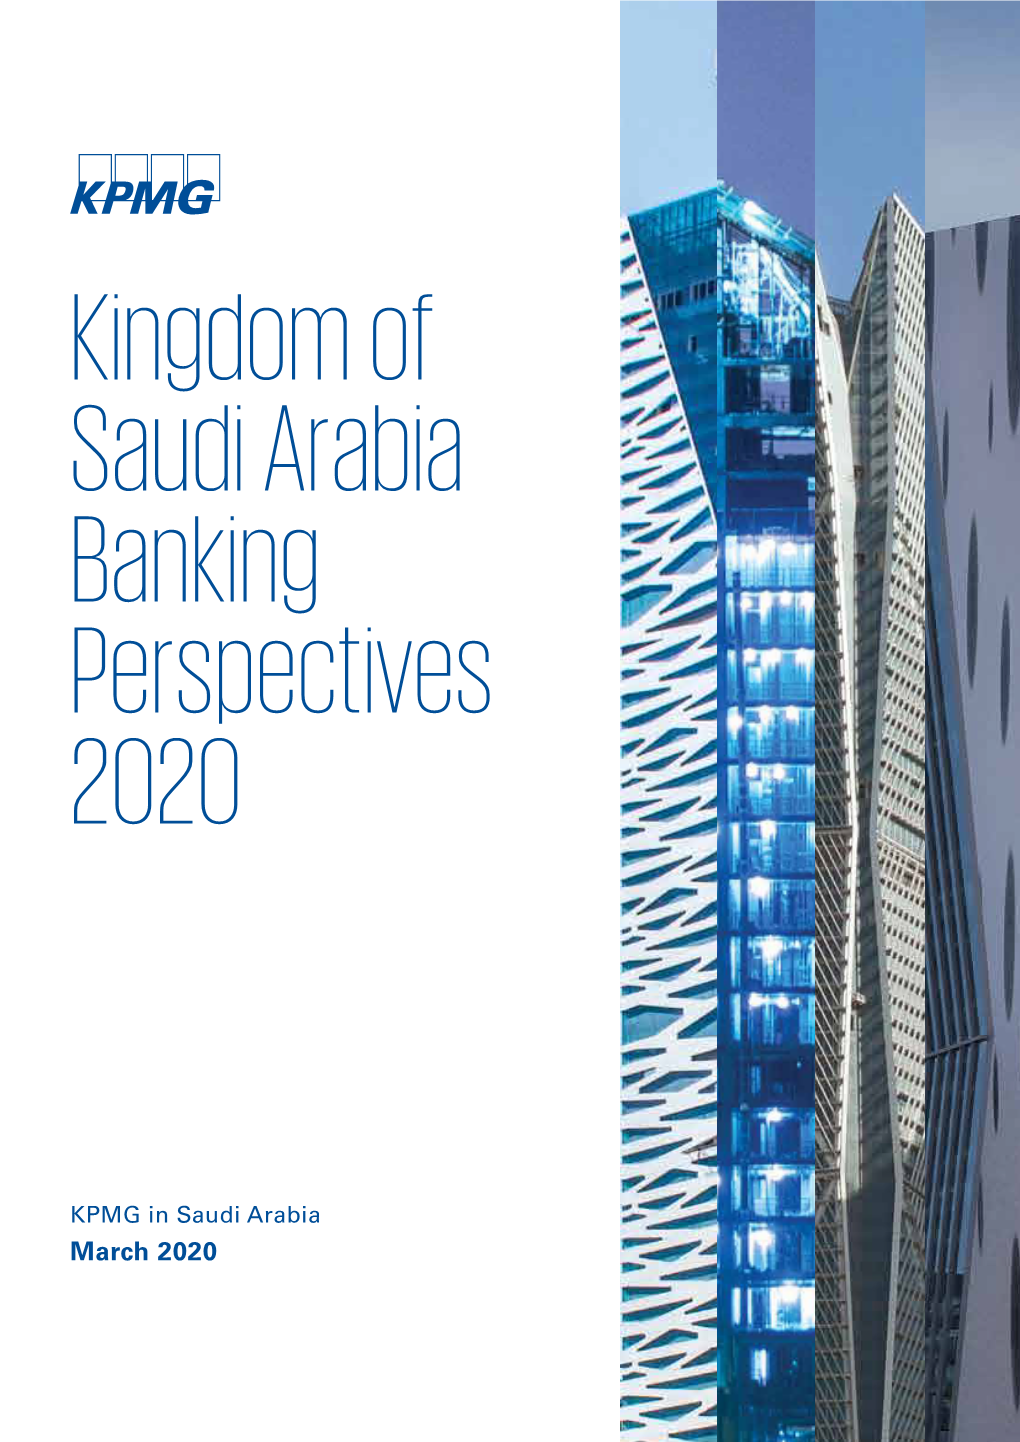 KPMG KSA Banking Perspectives 2020